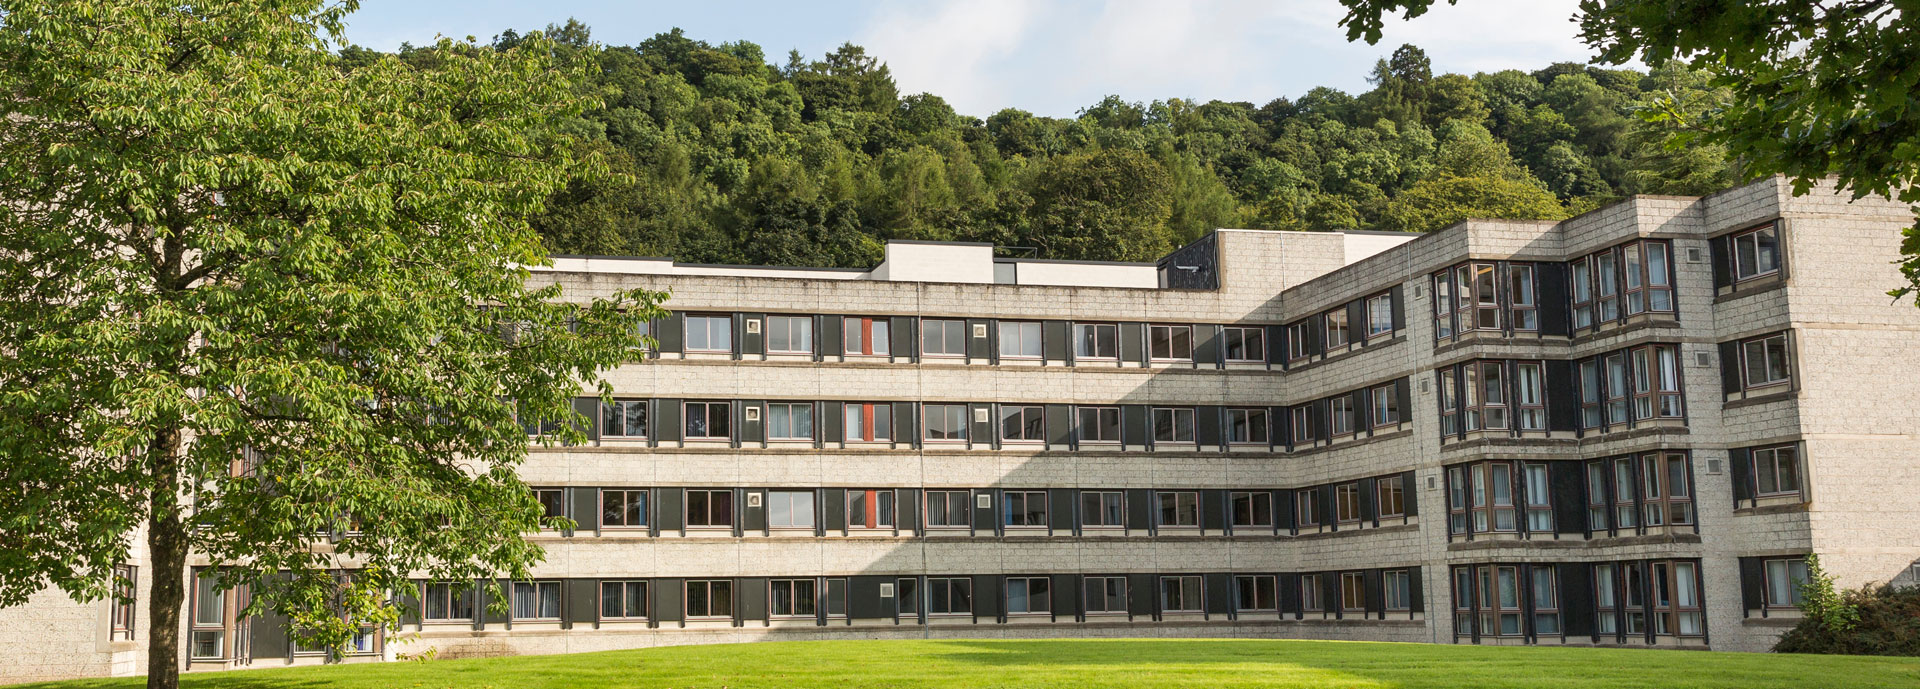 Polwarth House  accommodation,  University of Stirling